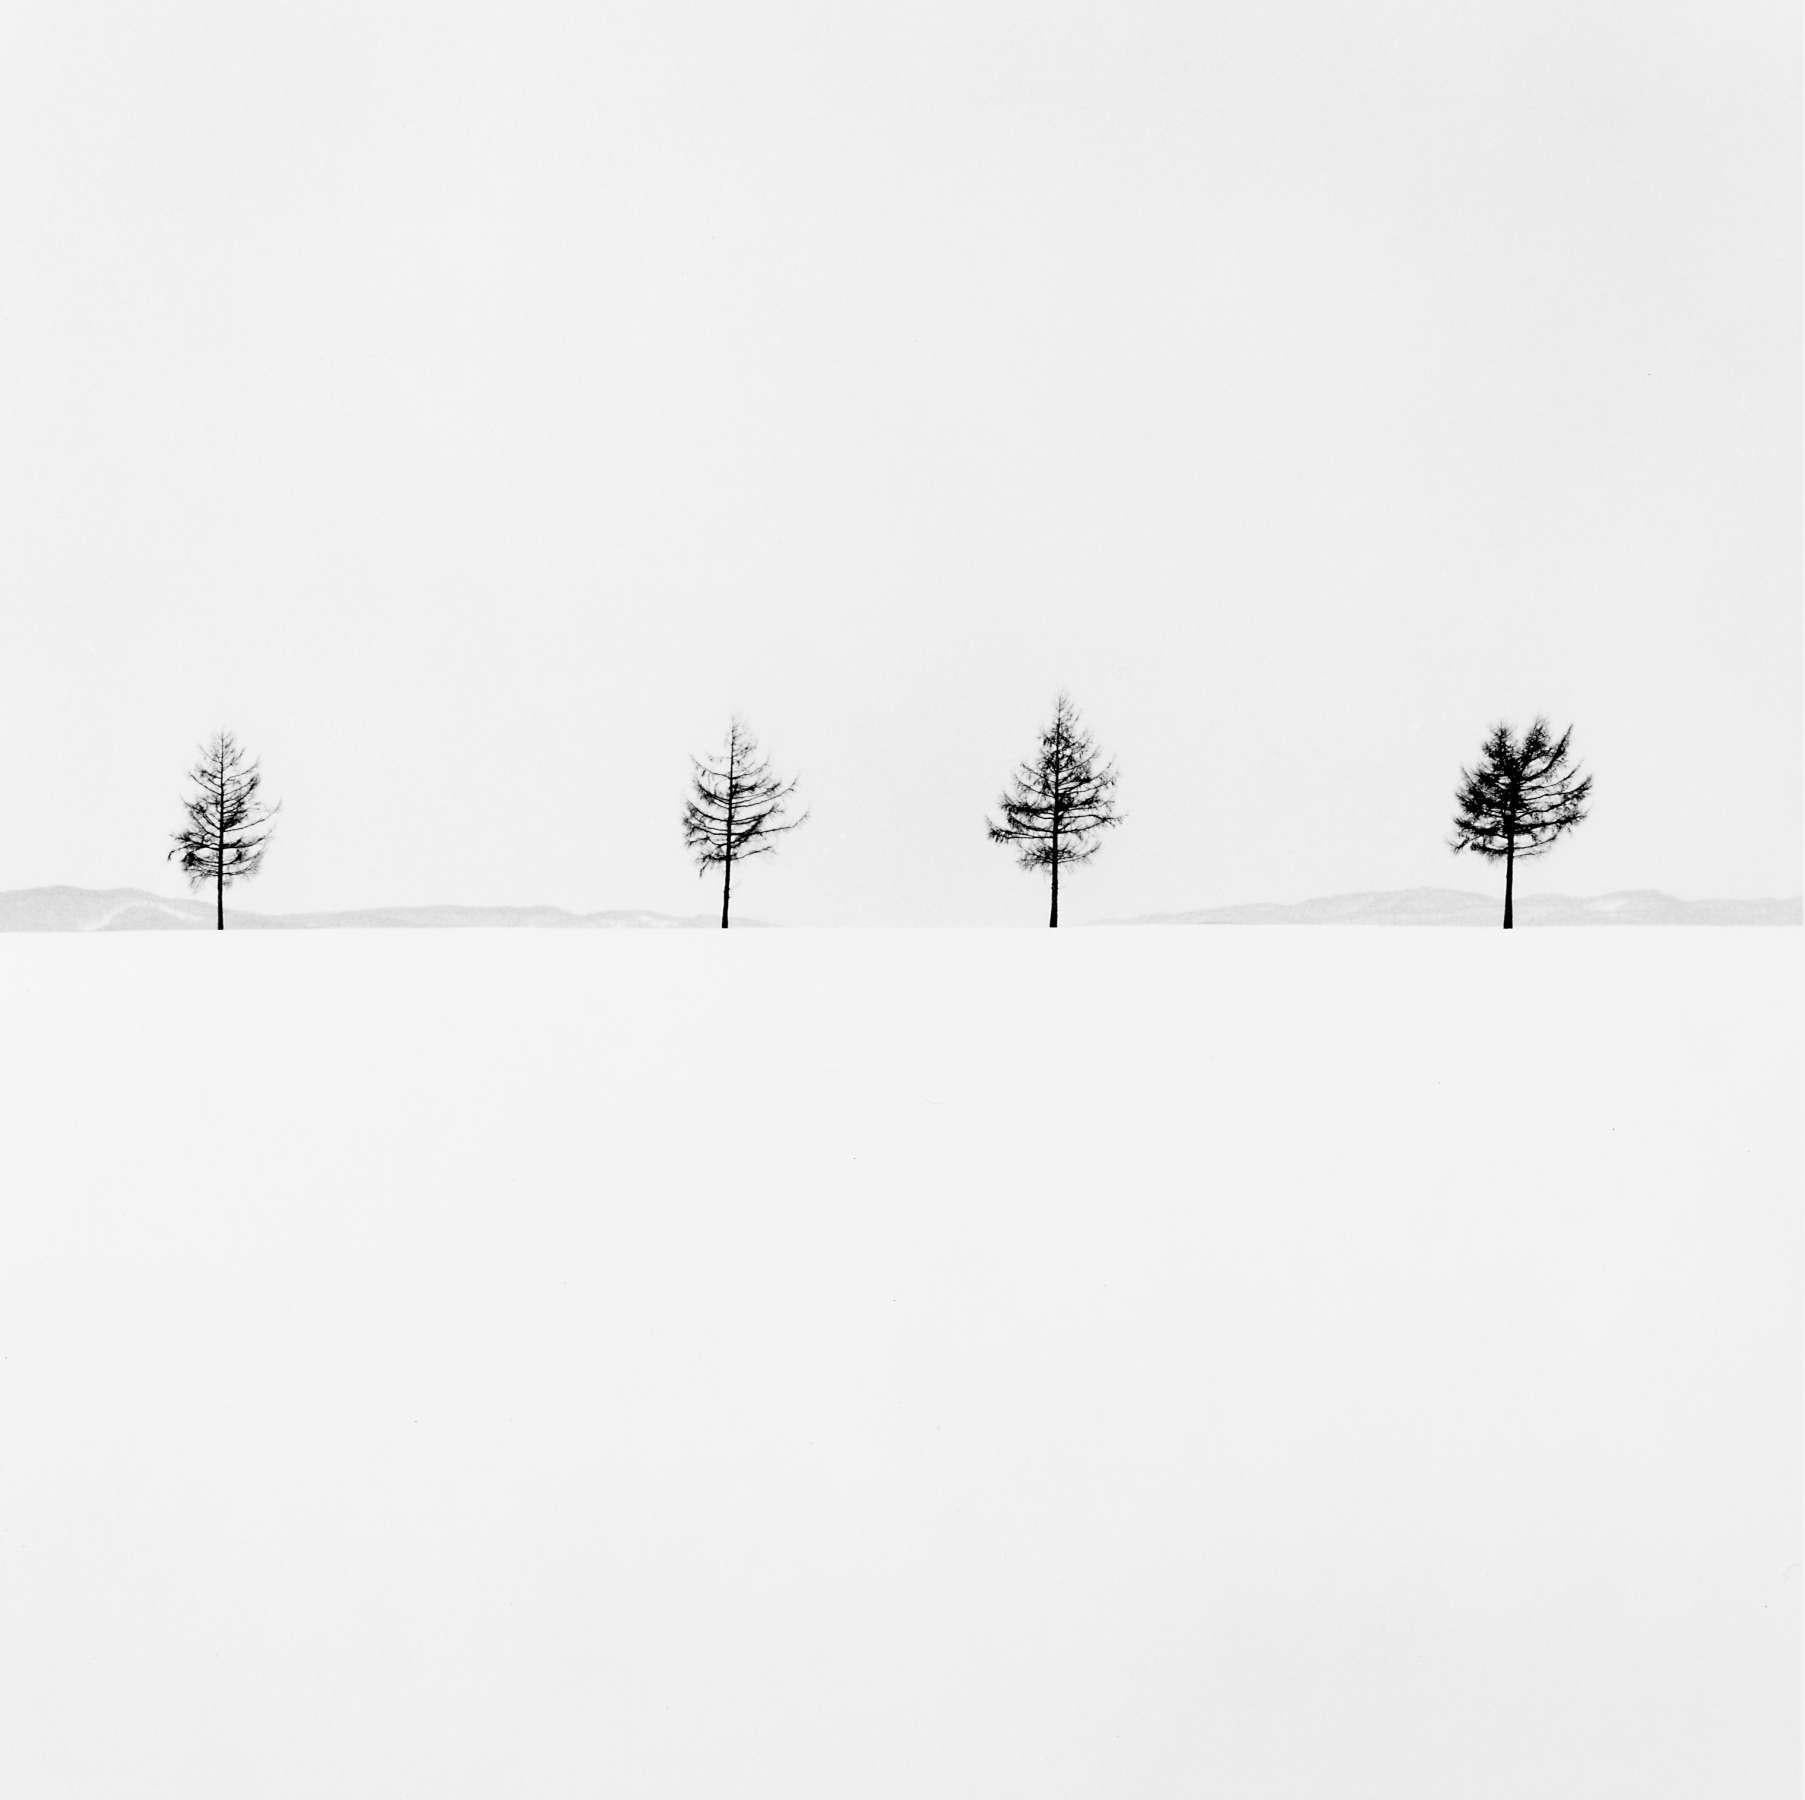 Michael Kenna Black and White Photograph - Kurosawa's Trees, Study 1, Memanbetsu, Hokkaido, Japan, 2004